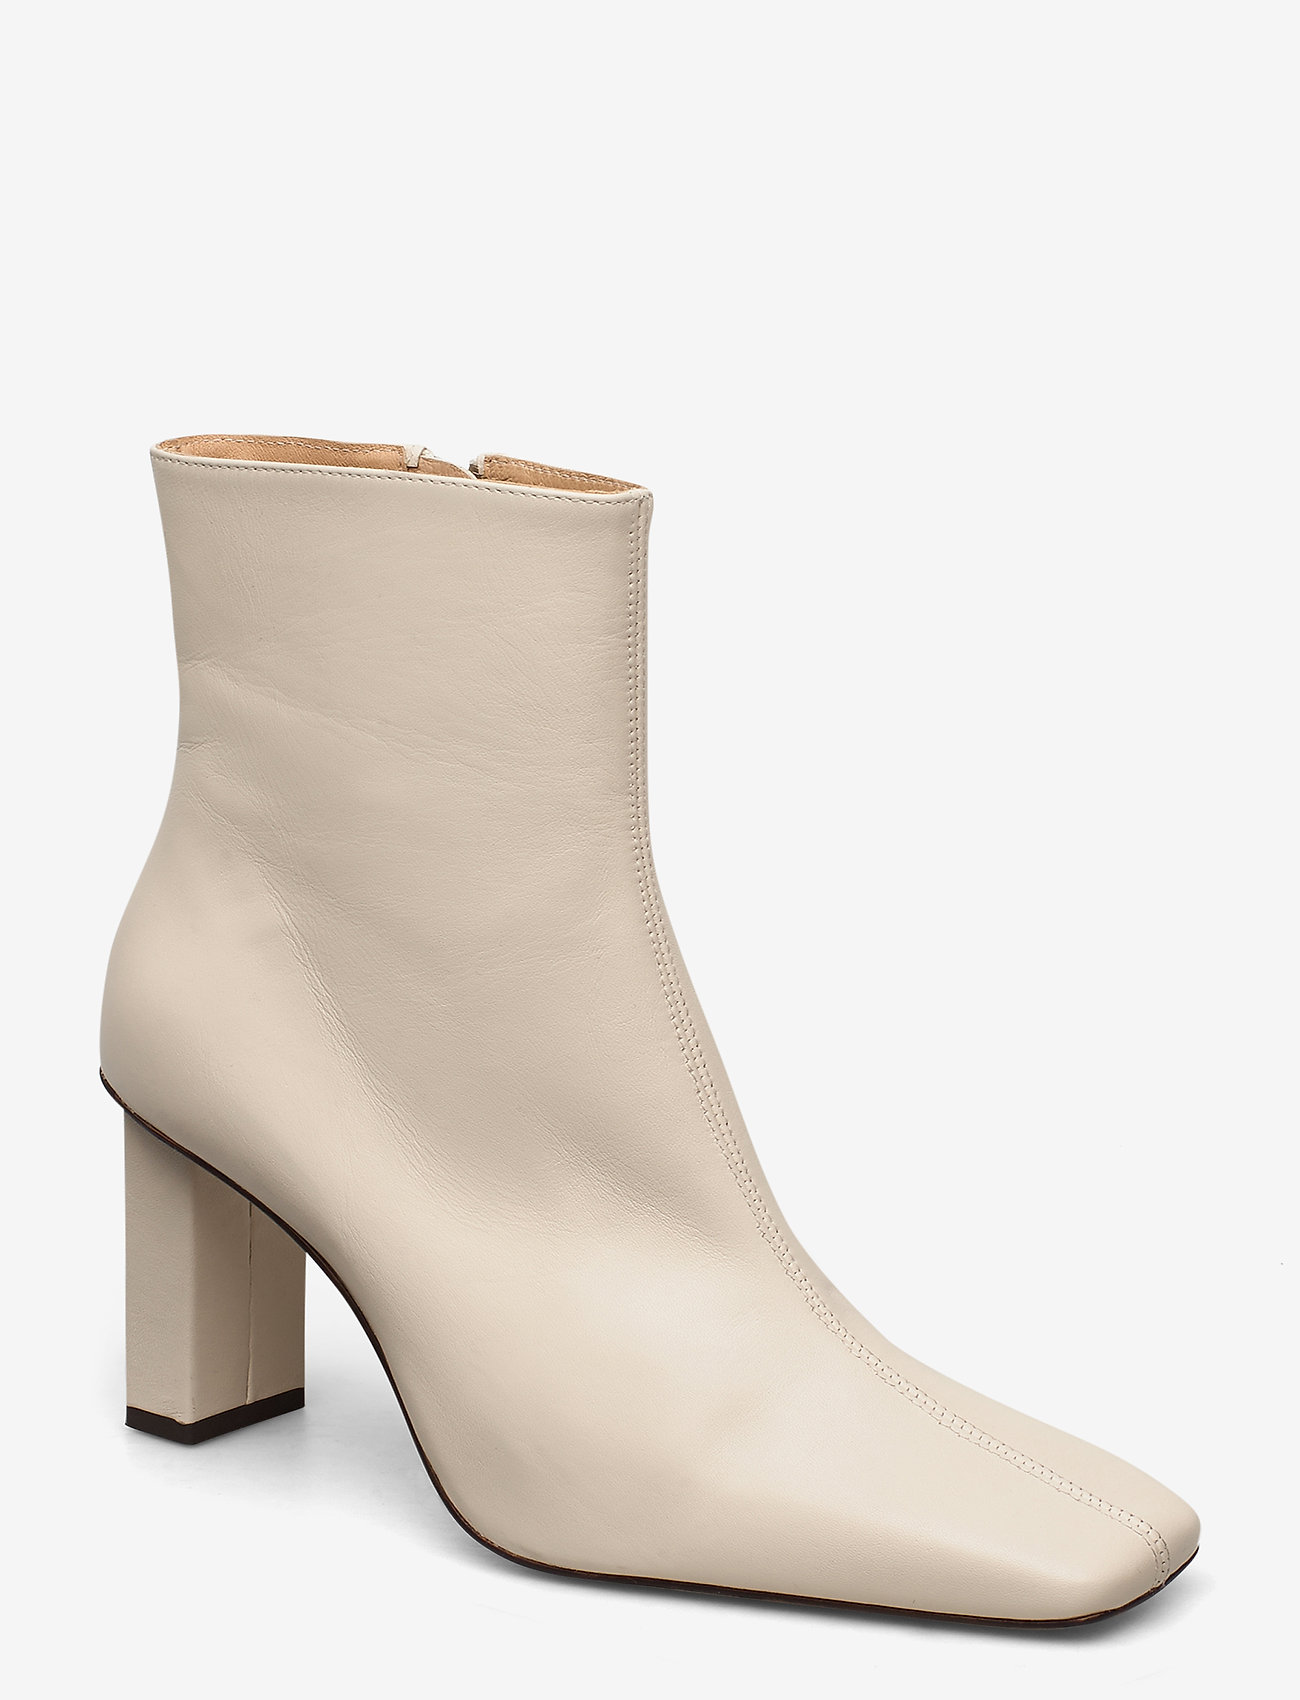 Joan Le CarrÉ Ankle Boot (Cream) (£349 